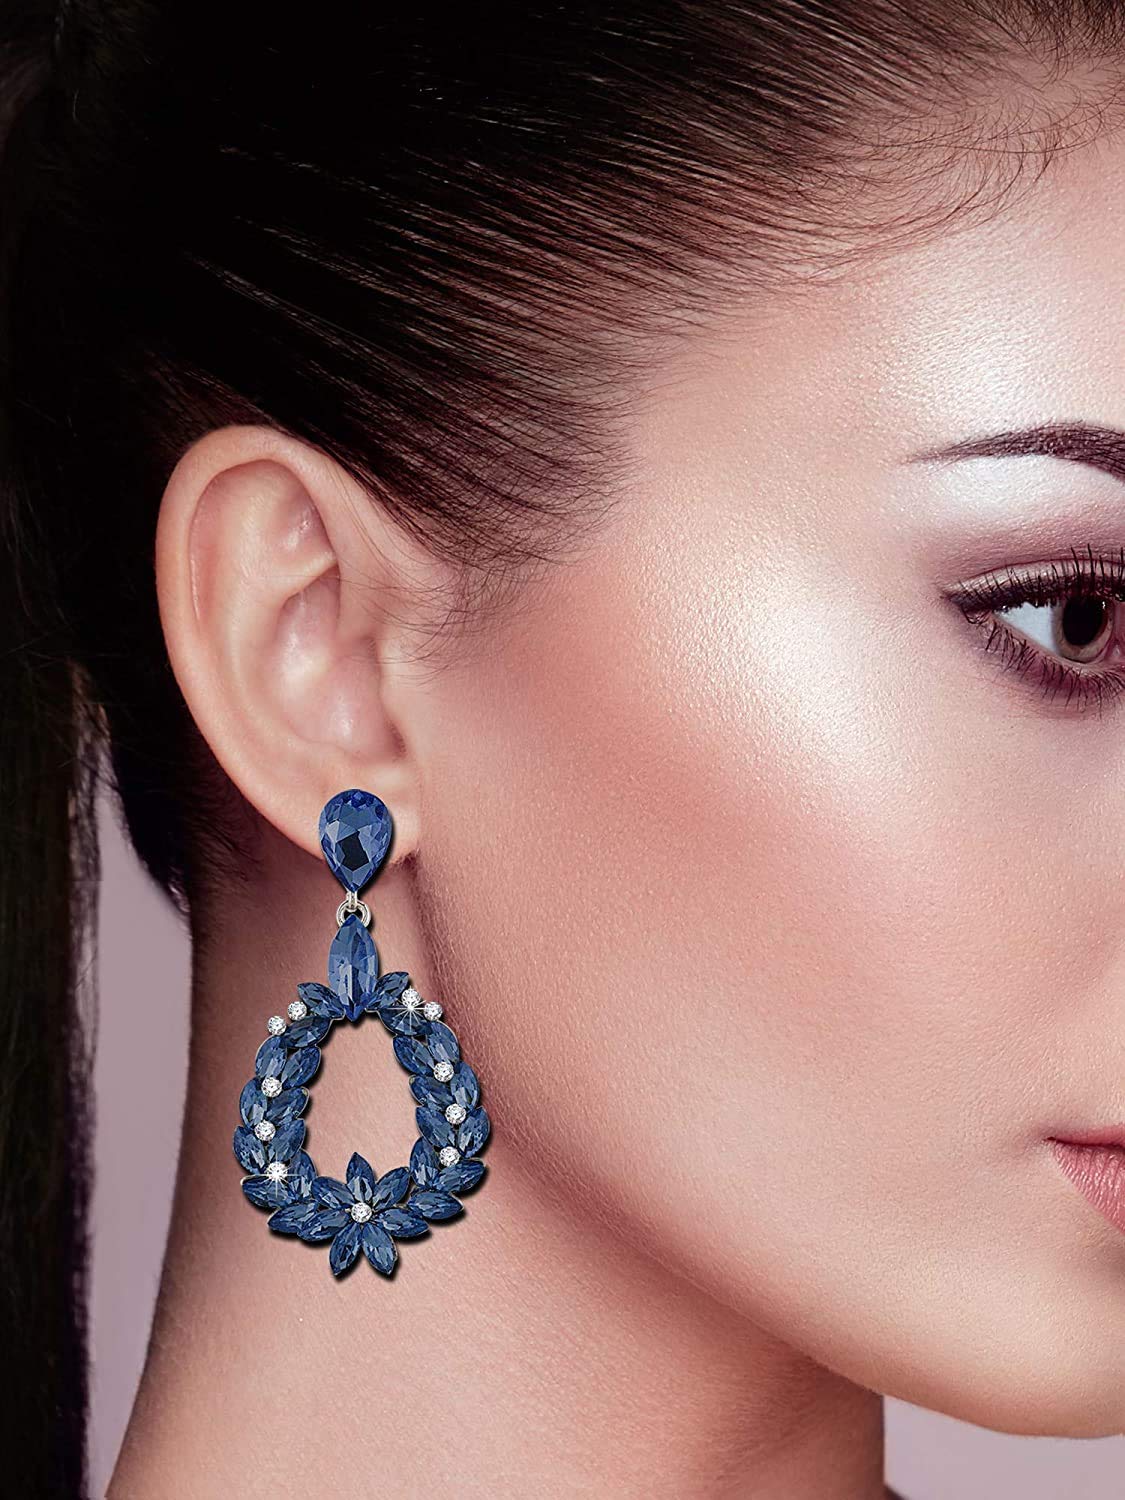 Royal Blue Stone Earrings for Casual and Festive Wear - Beatnik